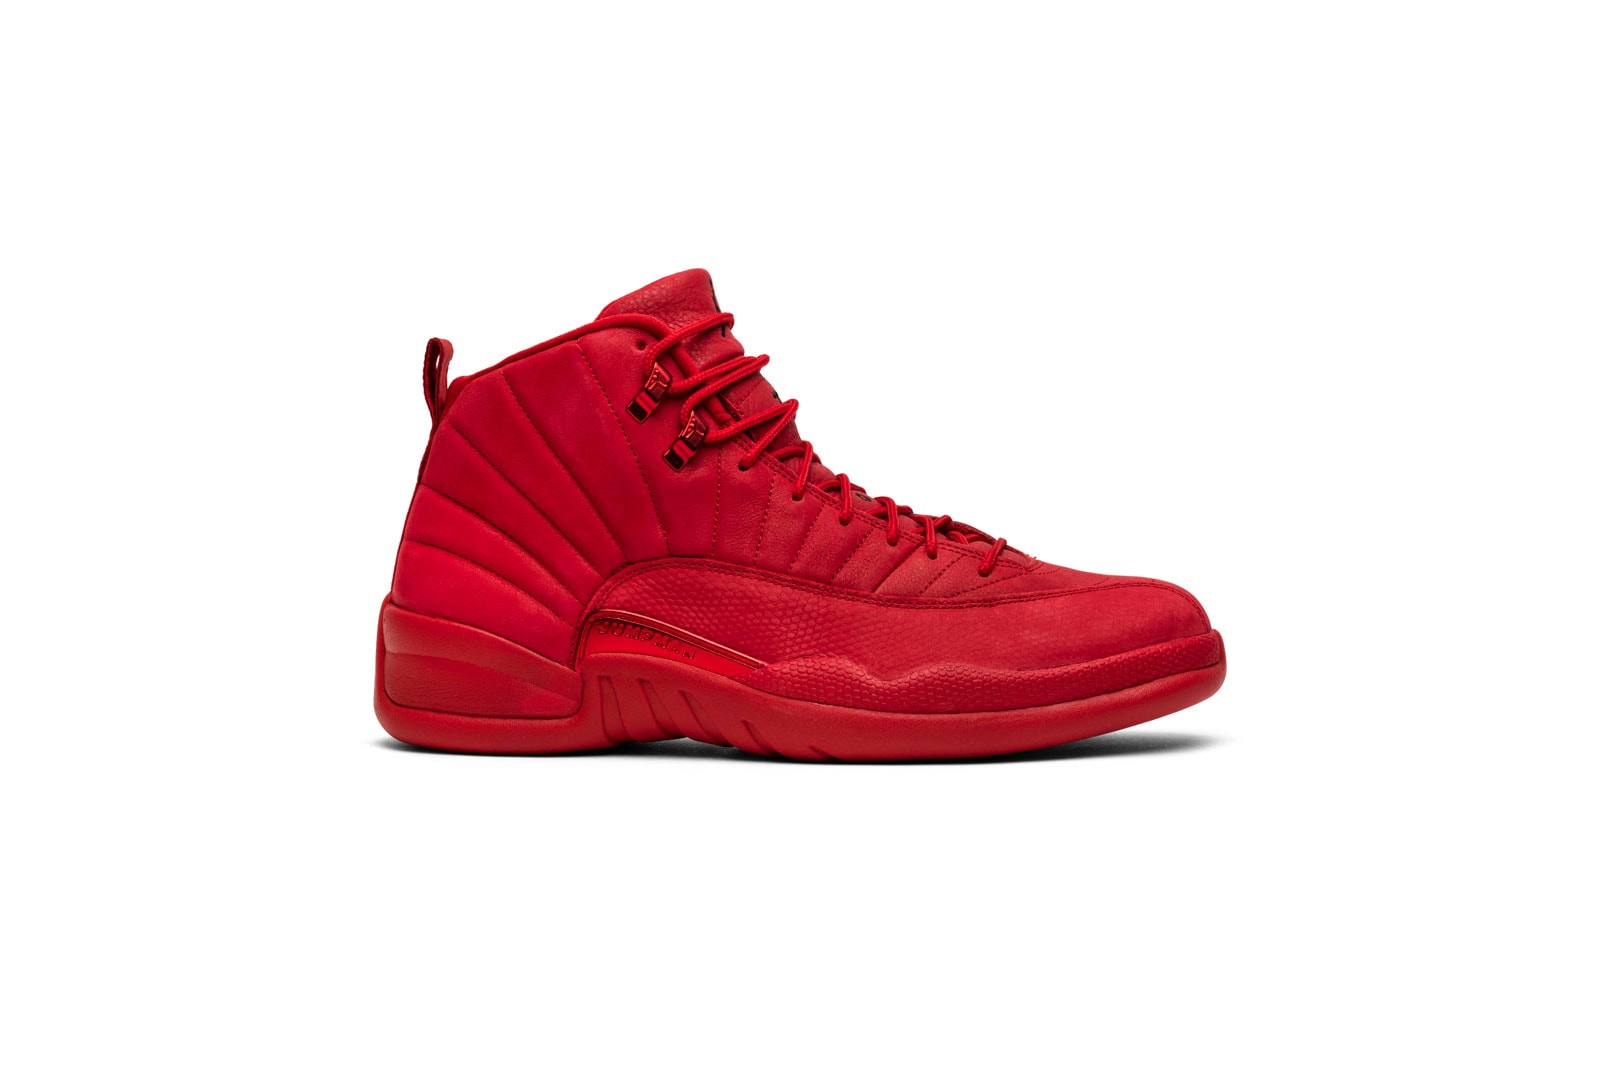 Air Jordan 12 Retro “Gym Red”